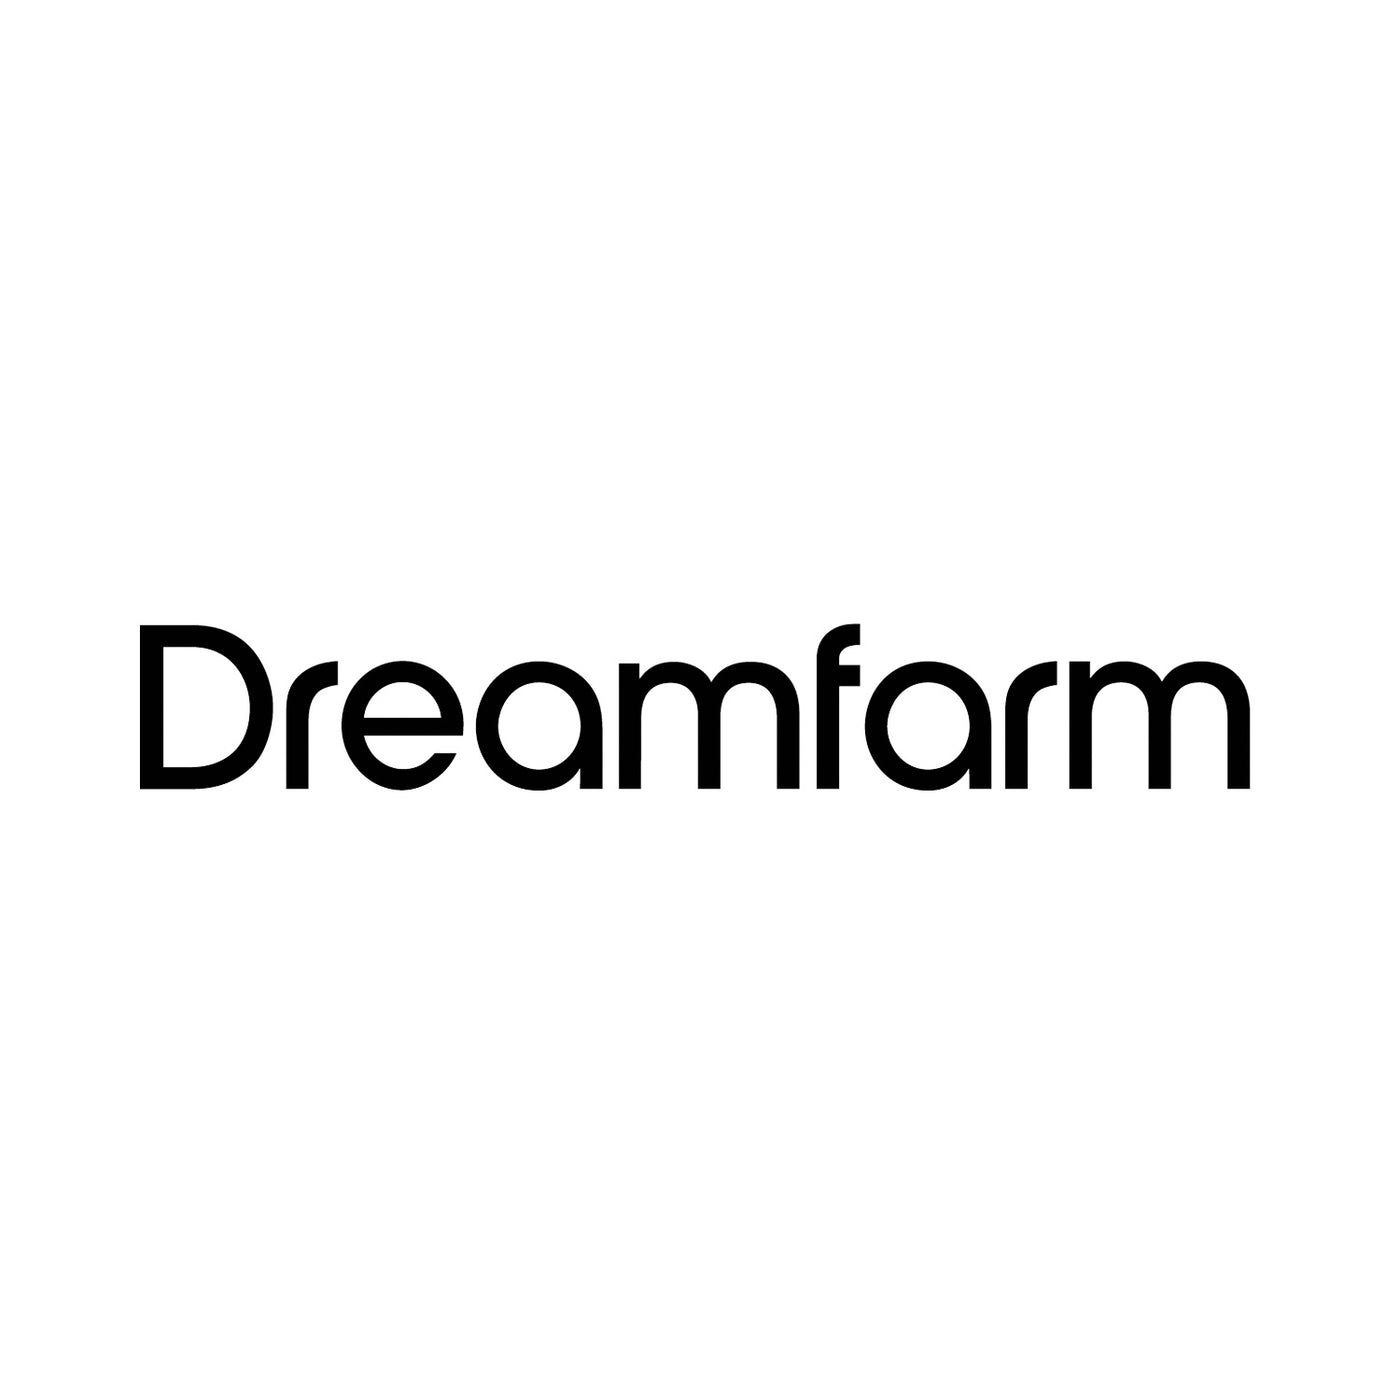 BRAND | Dreamfarm